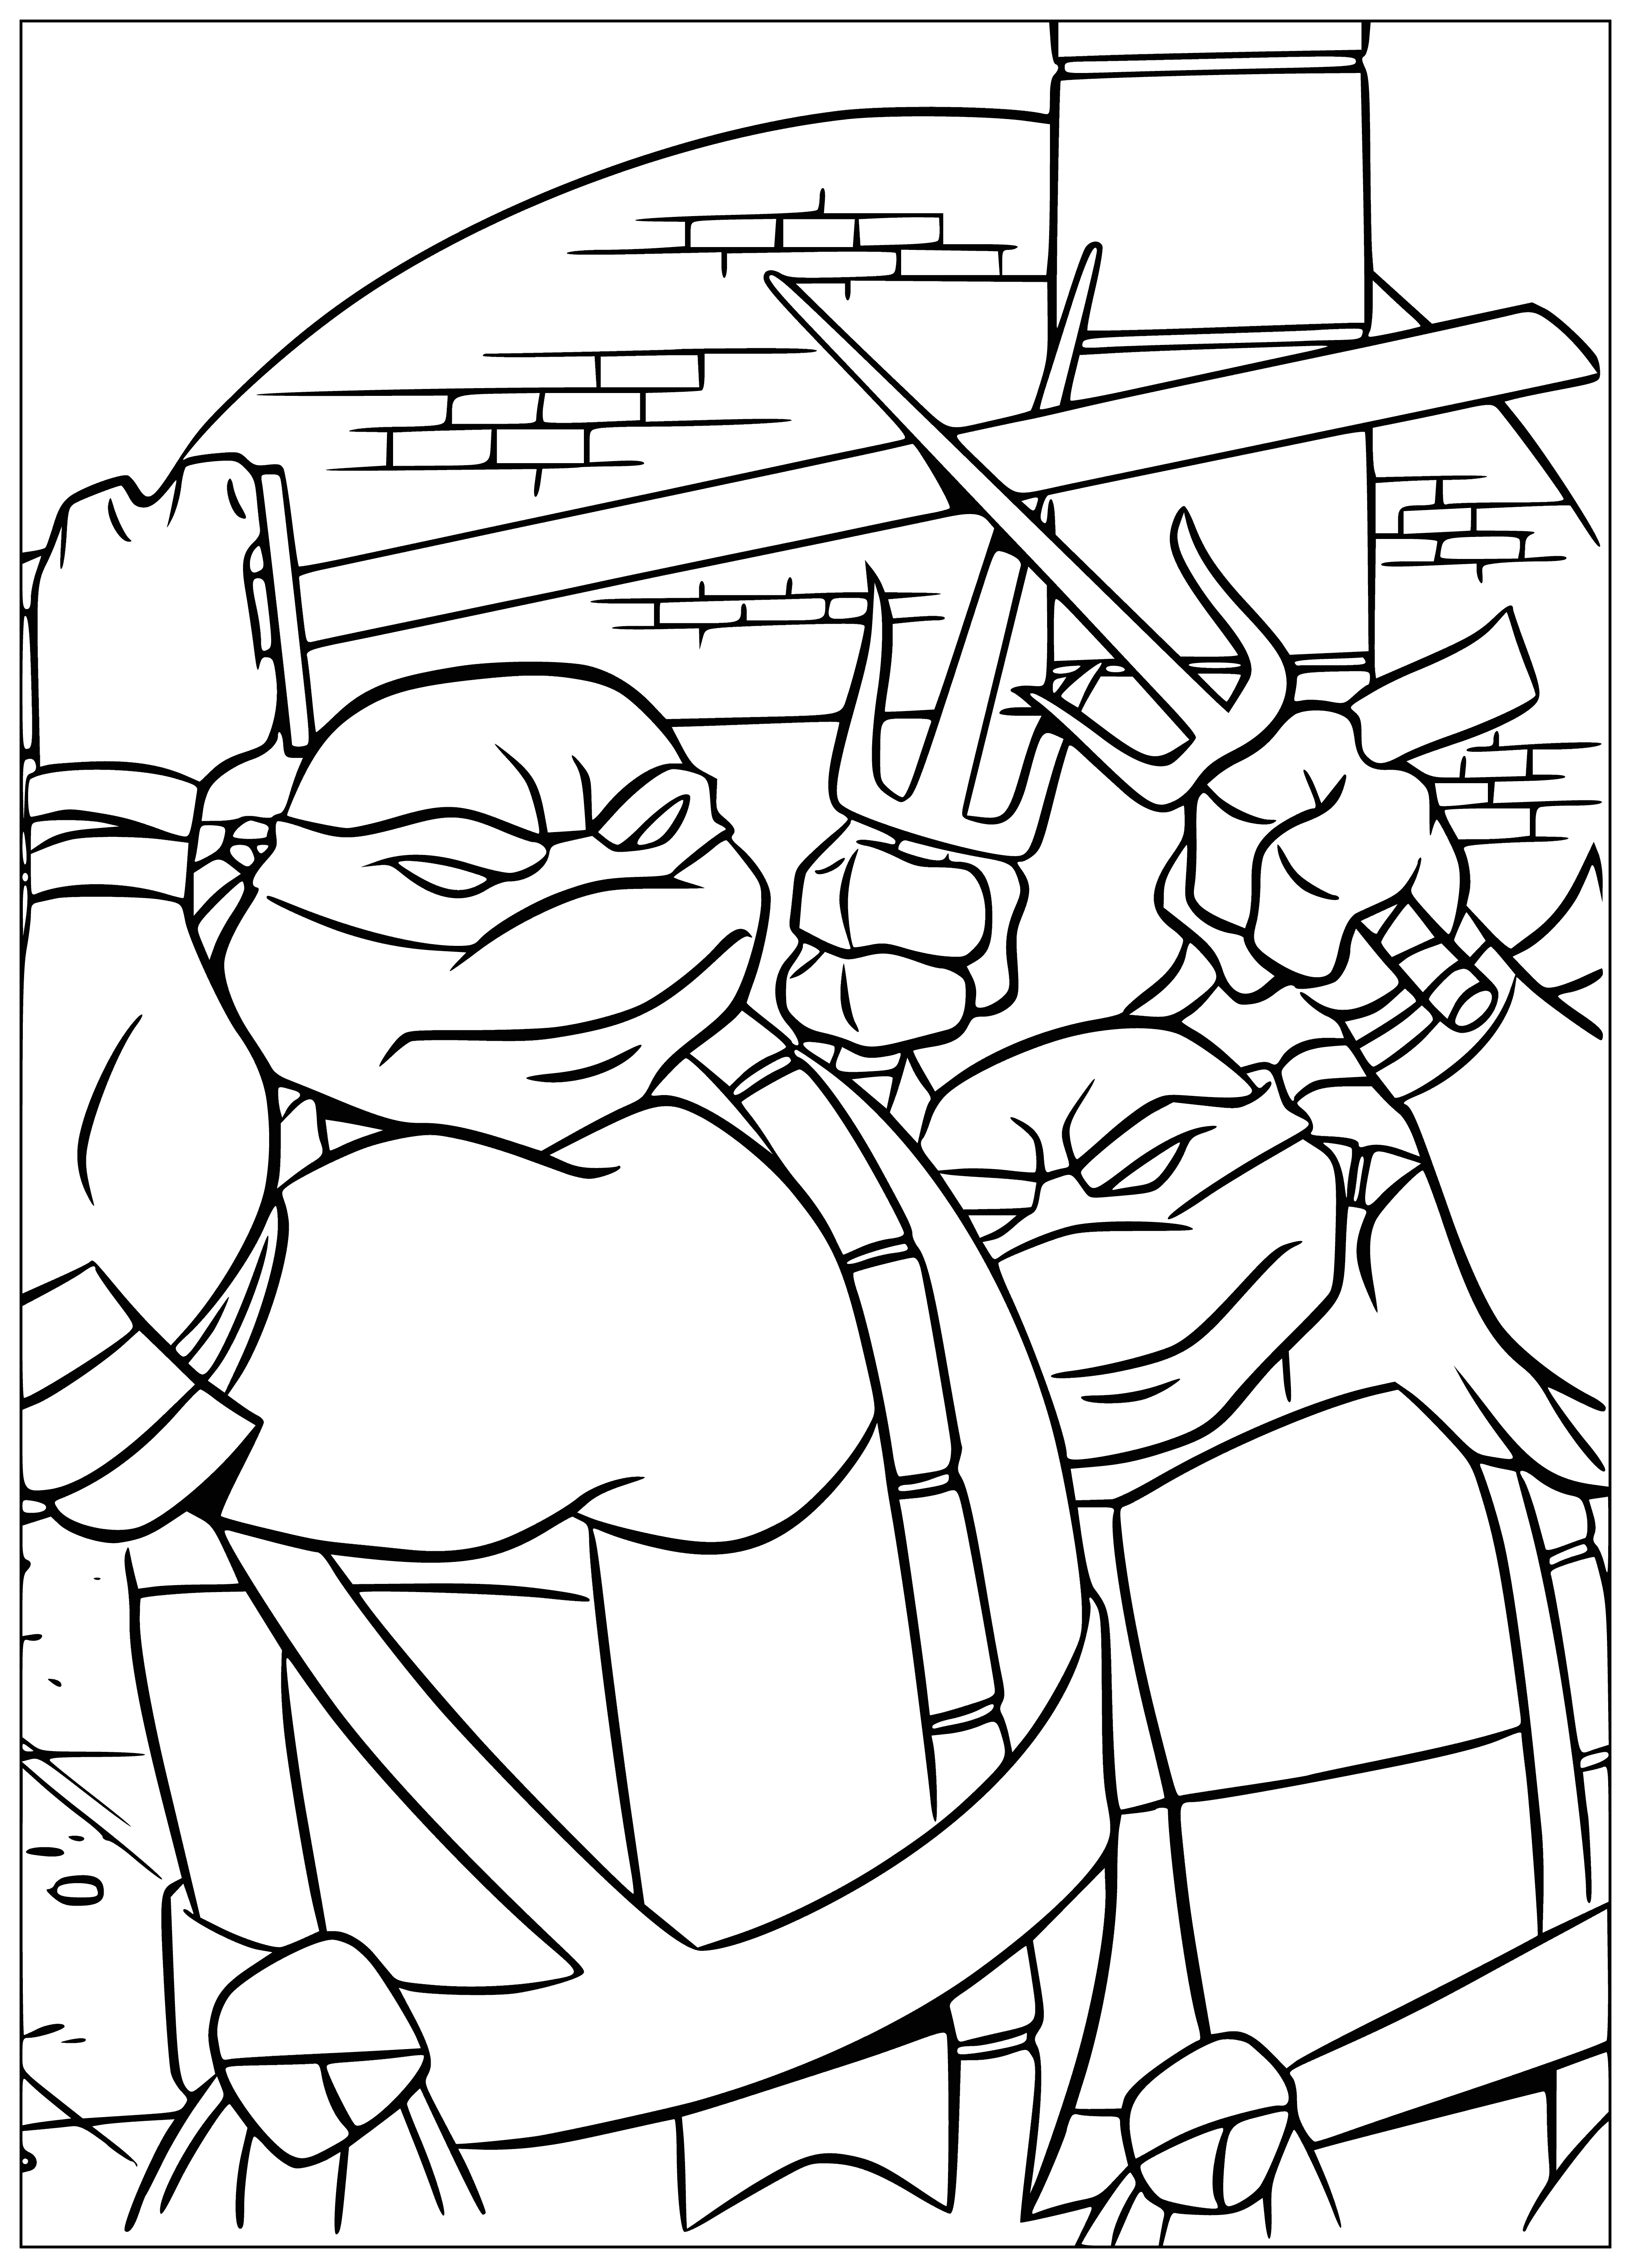 Raphael and Leonardo coloring page